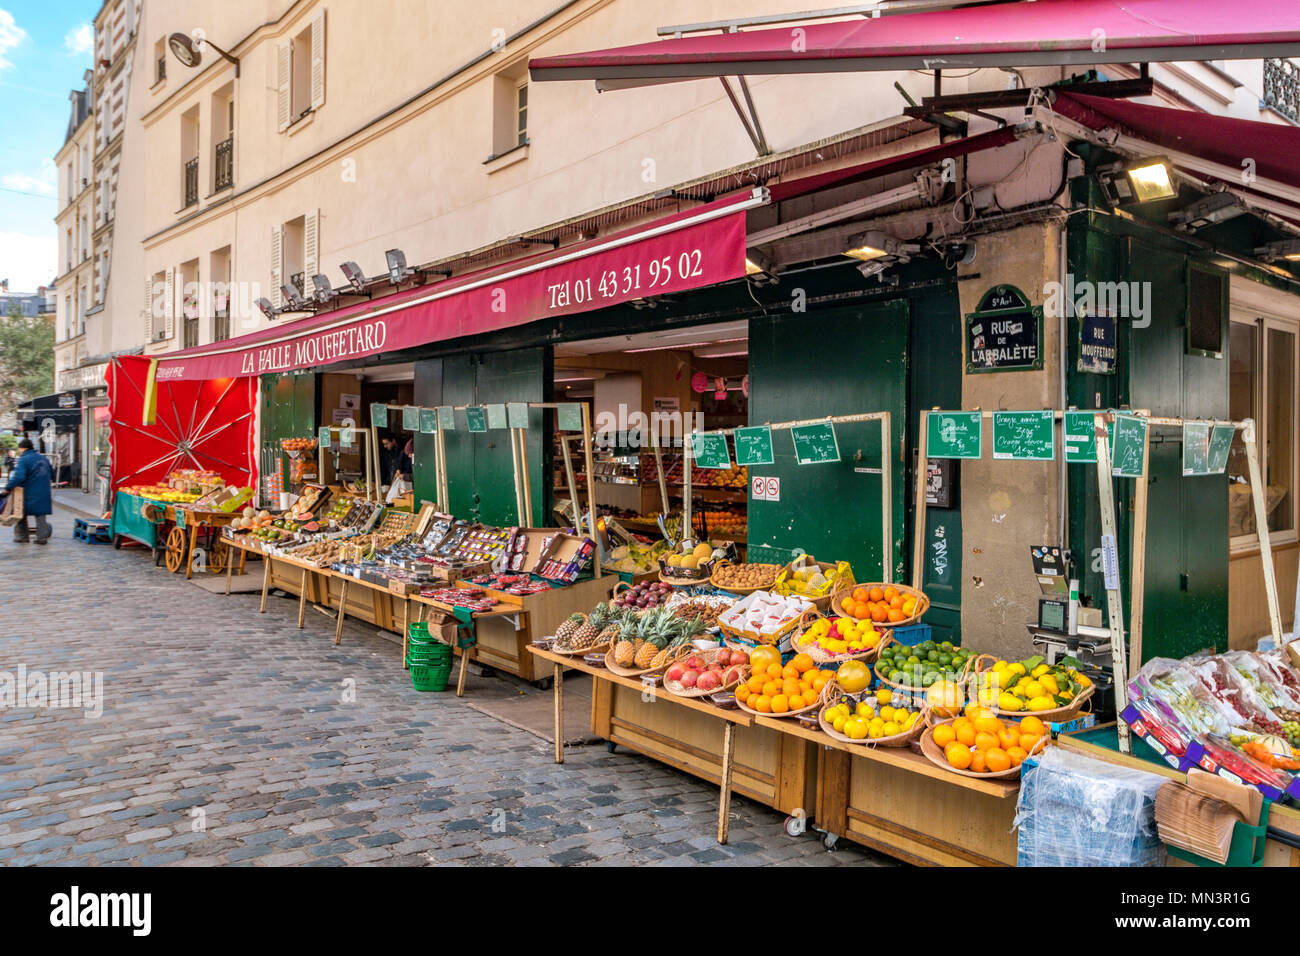 La Halle Mouffetard a frutta e verdura shop on Rue Mouffetard, Parigi, Francia Foto Stock